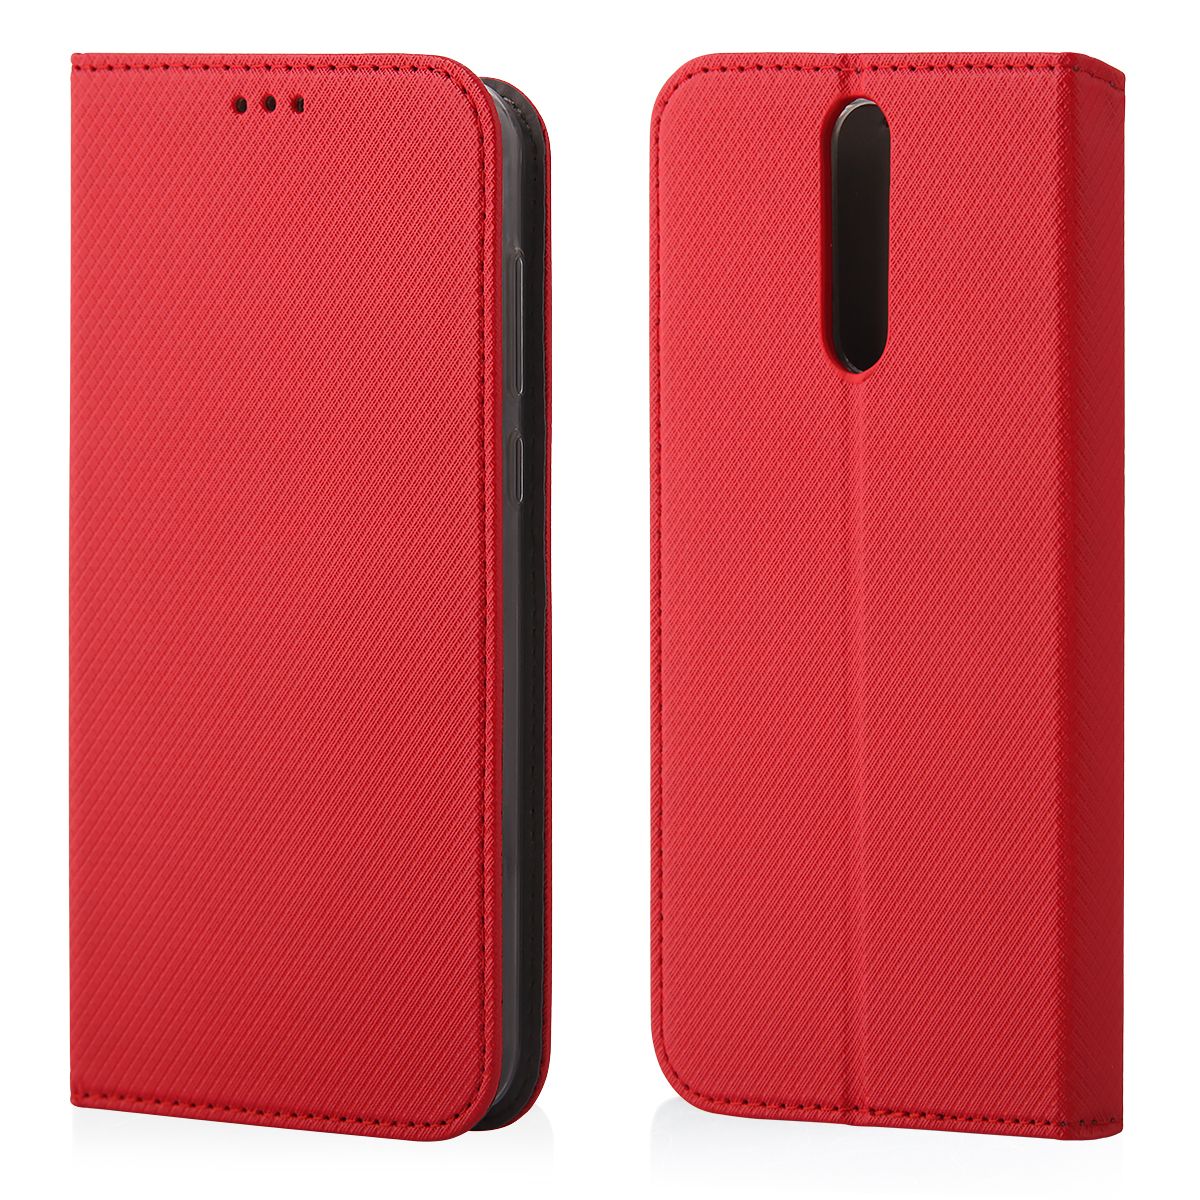 Pouzdro na Samsung A600 A6 2018 - Flip case magnet červené Ego mobile